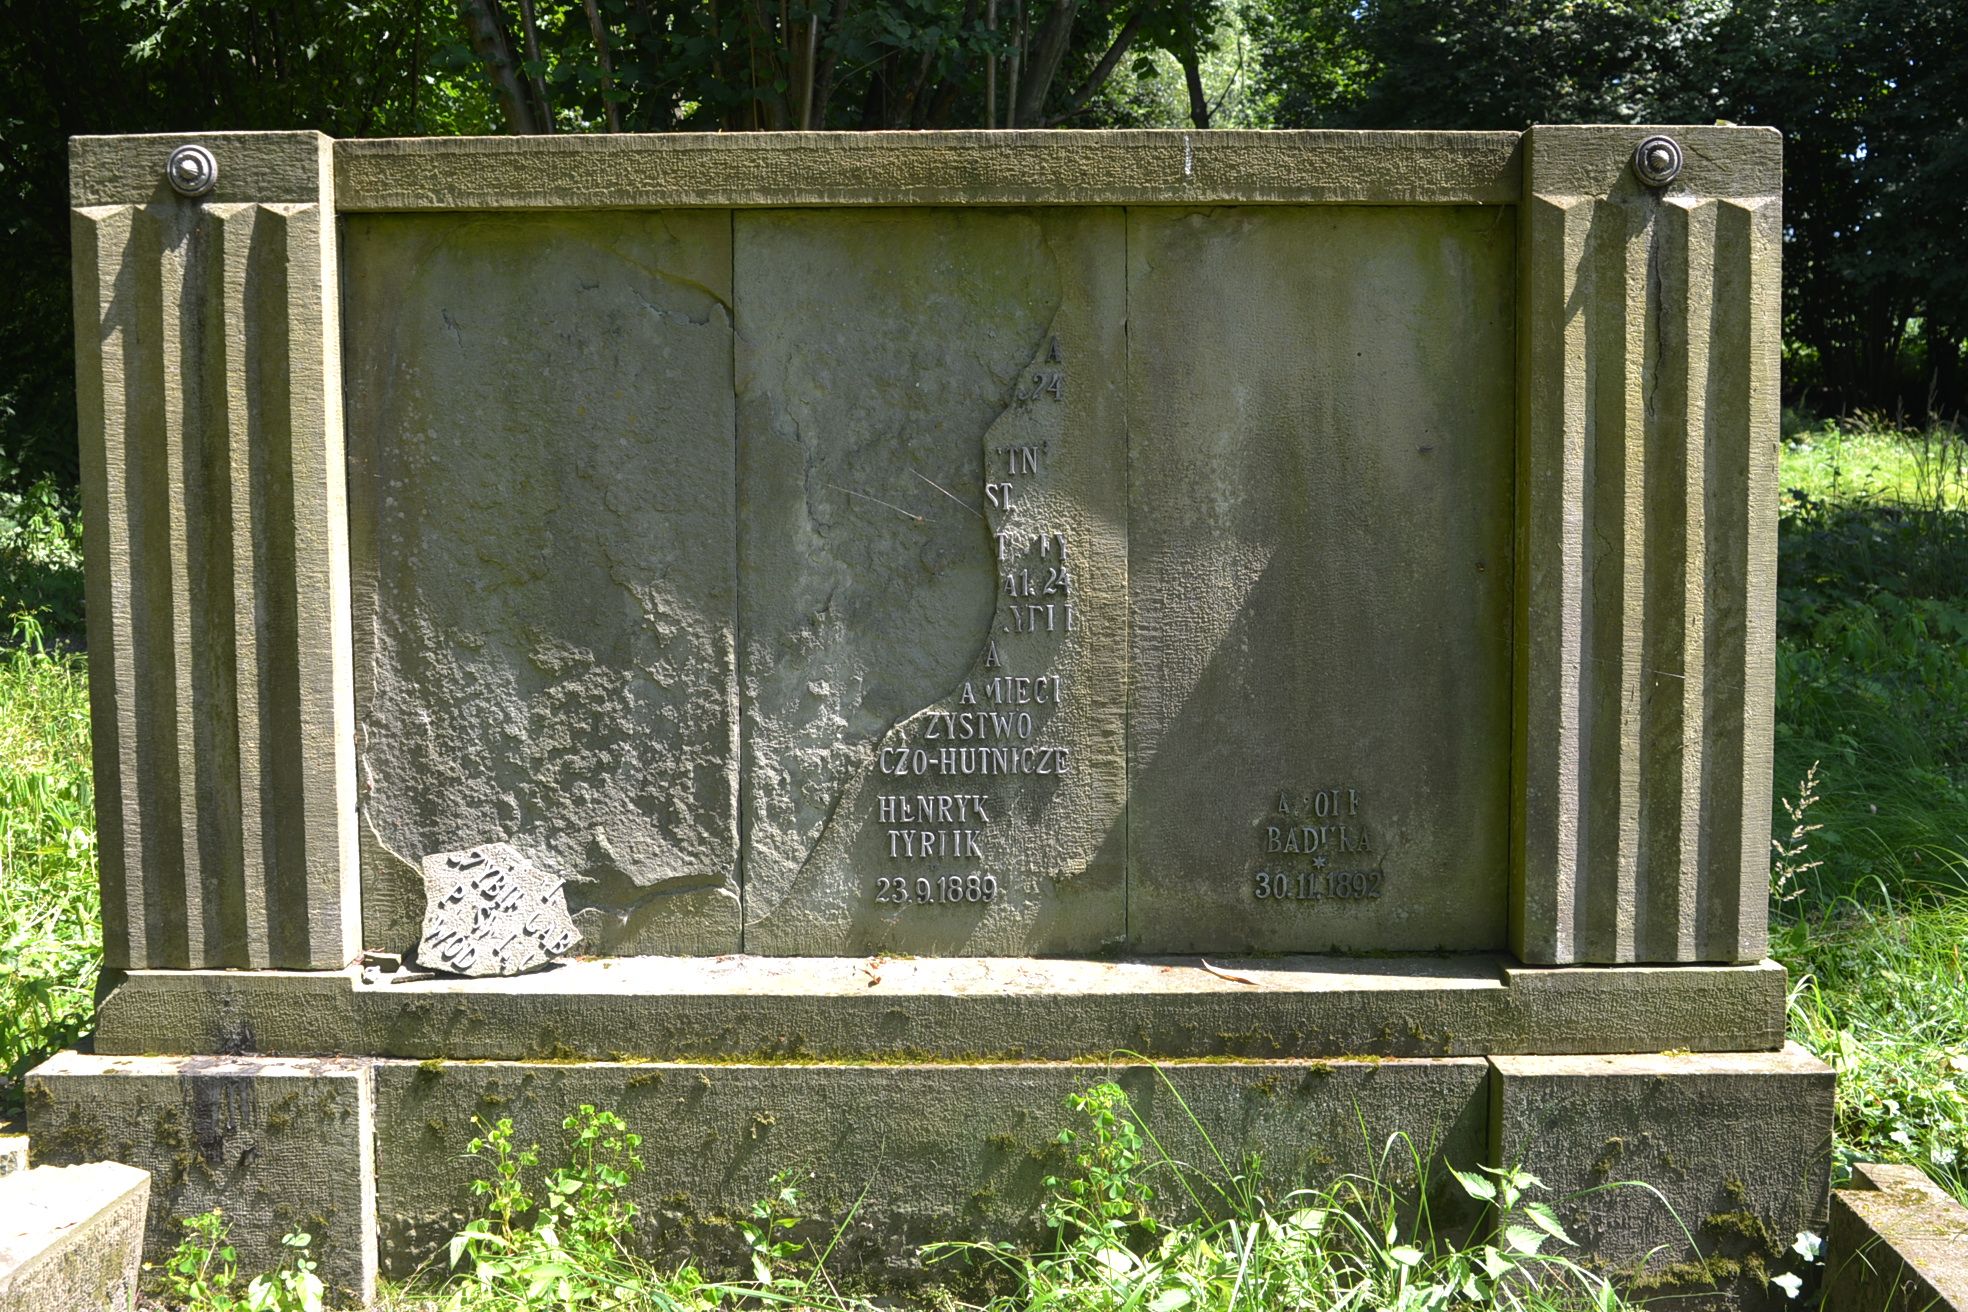 Tombstone of the mining accident victims Adolf Badura, Karol Dziadek and Henryk Tyrlik, cemetery in Karviná Mexico, Czech Republic, as of 2022